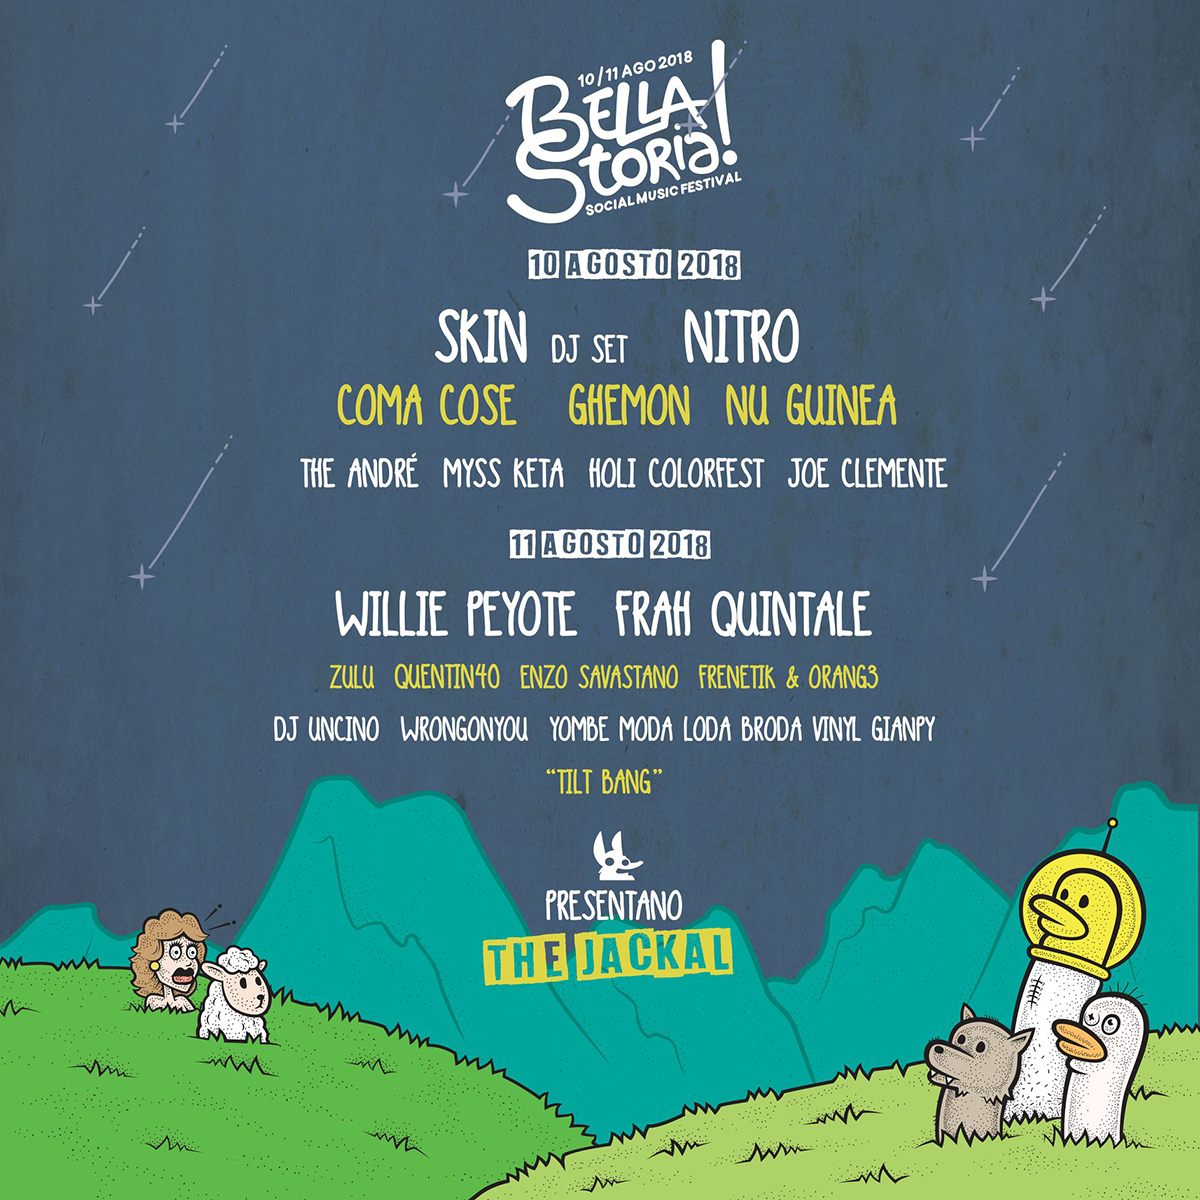 BellaStoria – Social Music Festival 2018